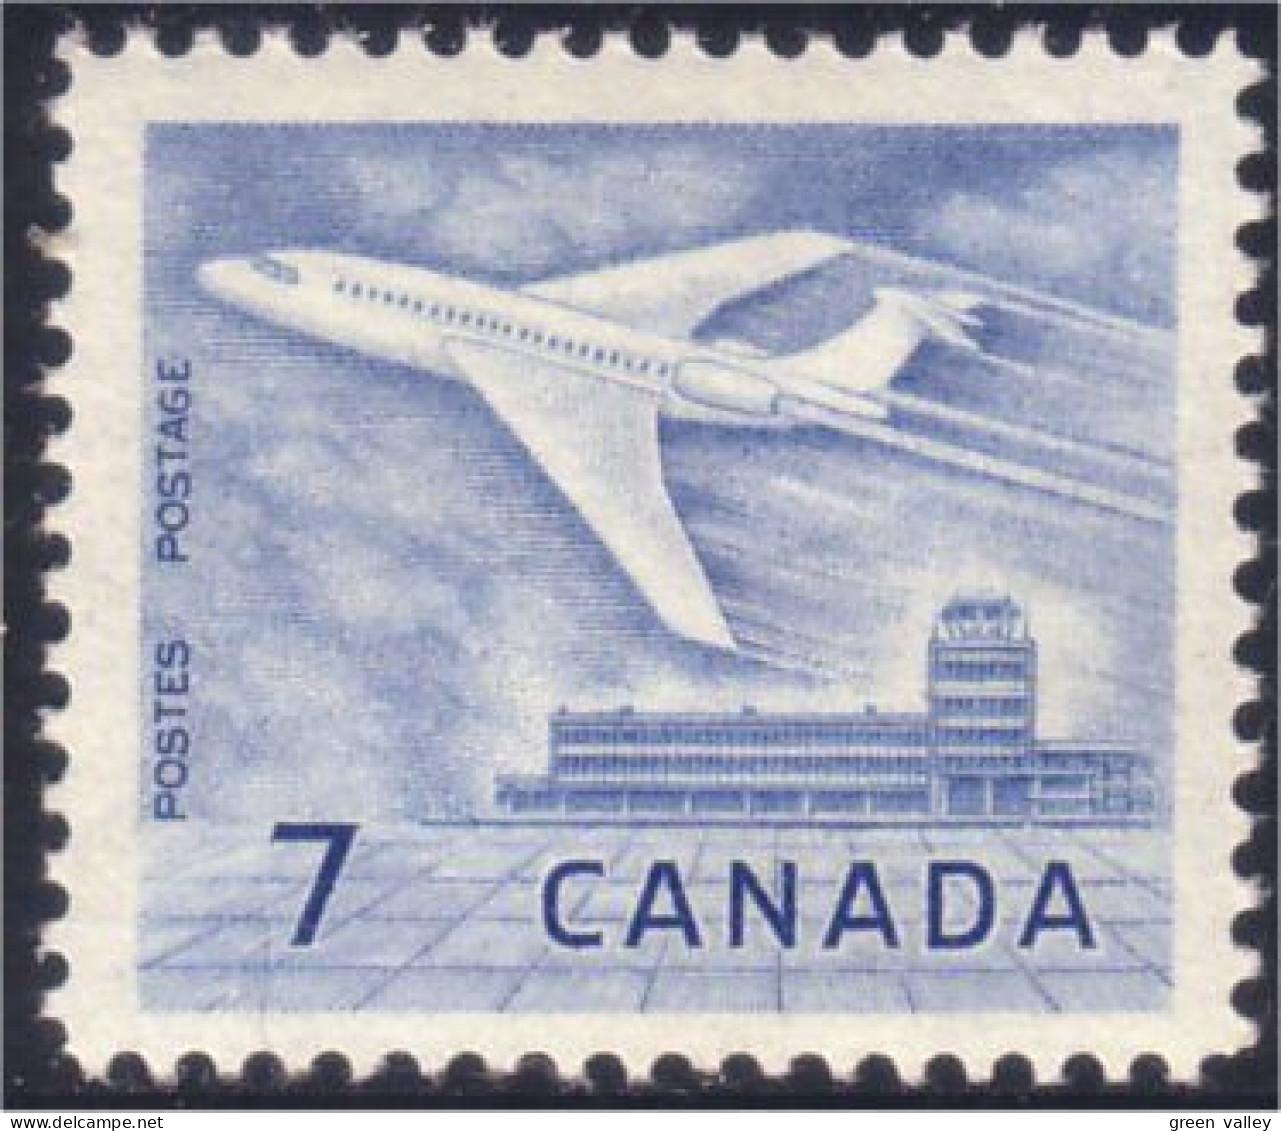 Canada Avion Jet Airplane MNH ** Neuf SC (04-14a) - Ongebruikt